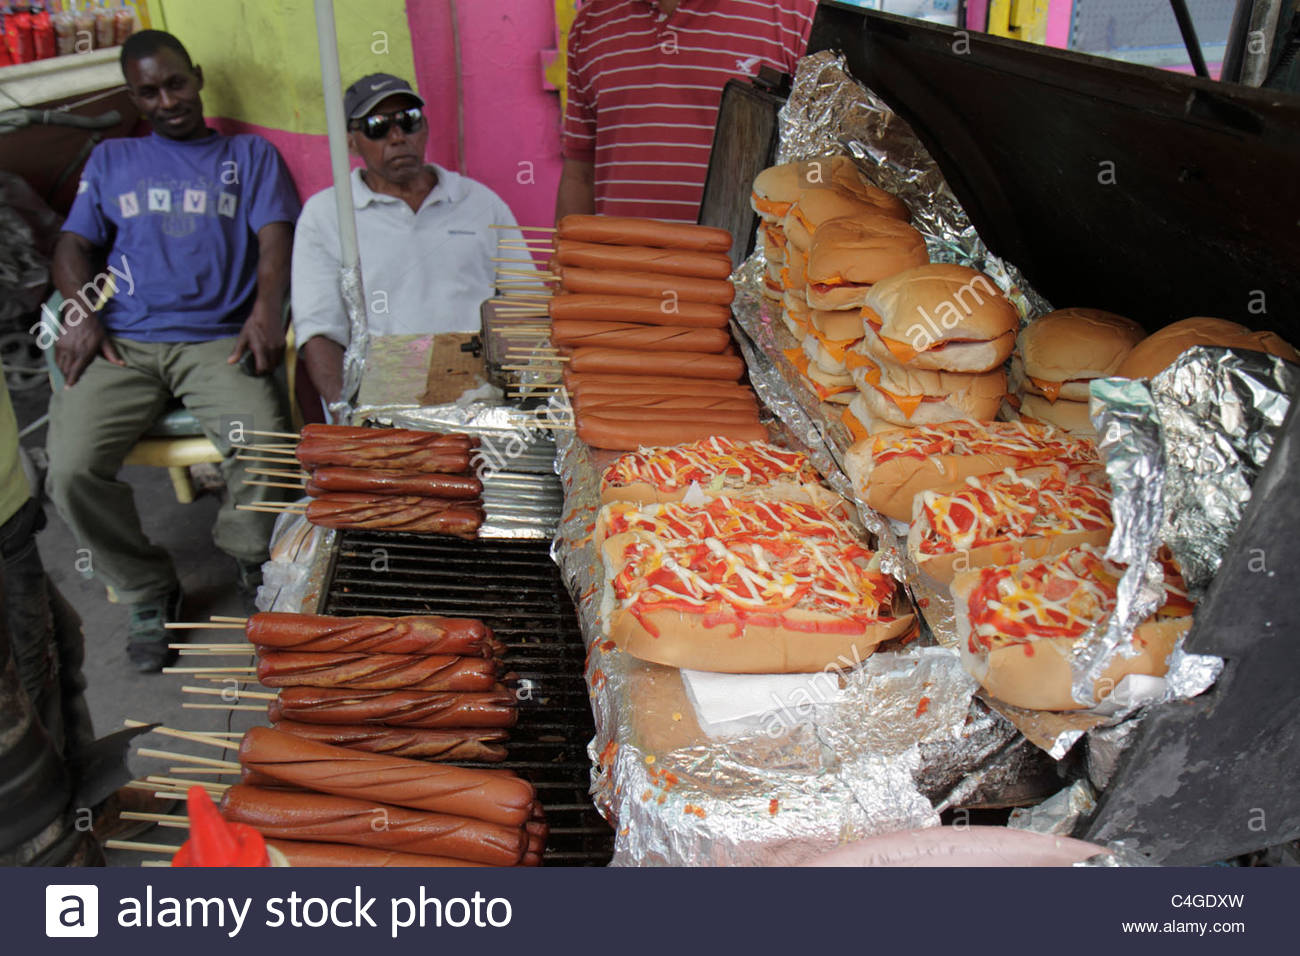 Dominican Republic Santo Domingo Calle Rovelo Street Vendor Food Stock Photo, Royalty Free Image ...